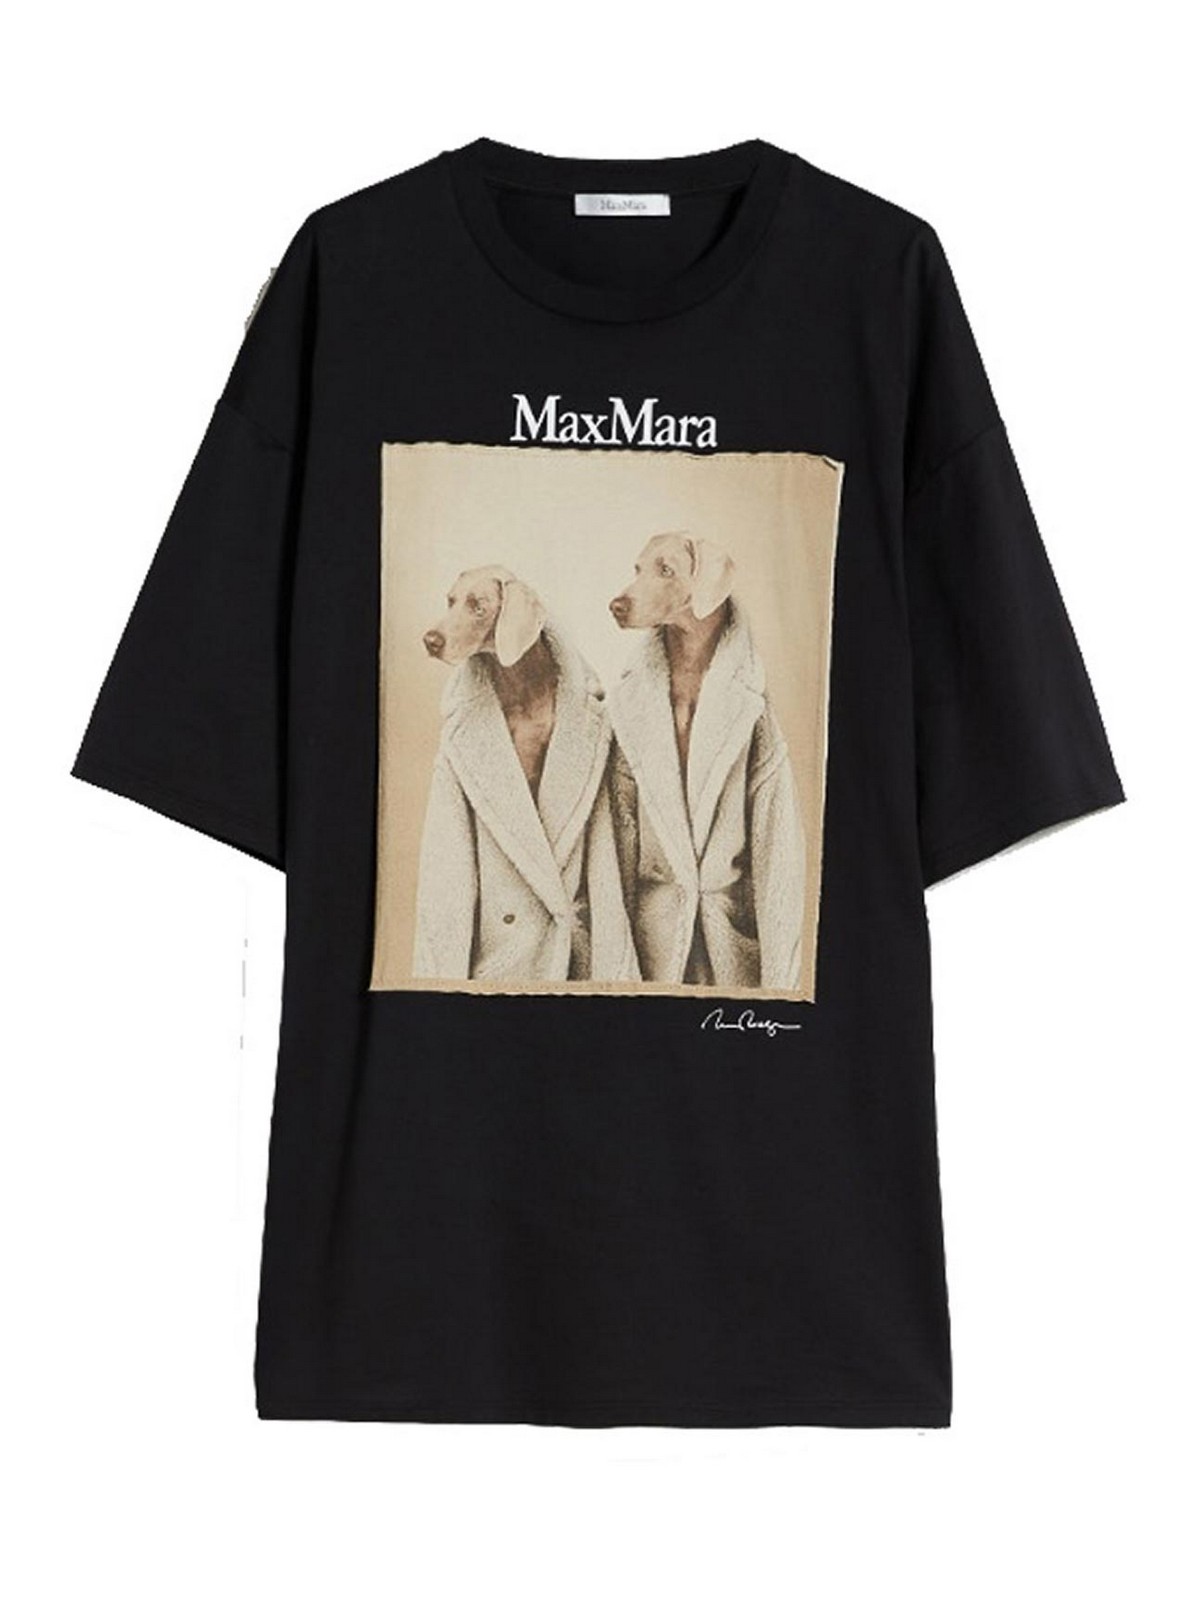 Tシャツ Max Mara - Tシャツ - 黒 - 2319460139600TACCO011 | THEBS